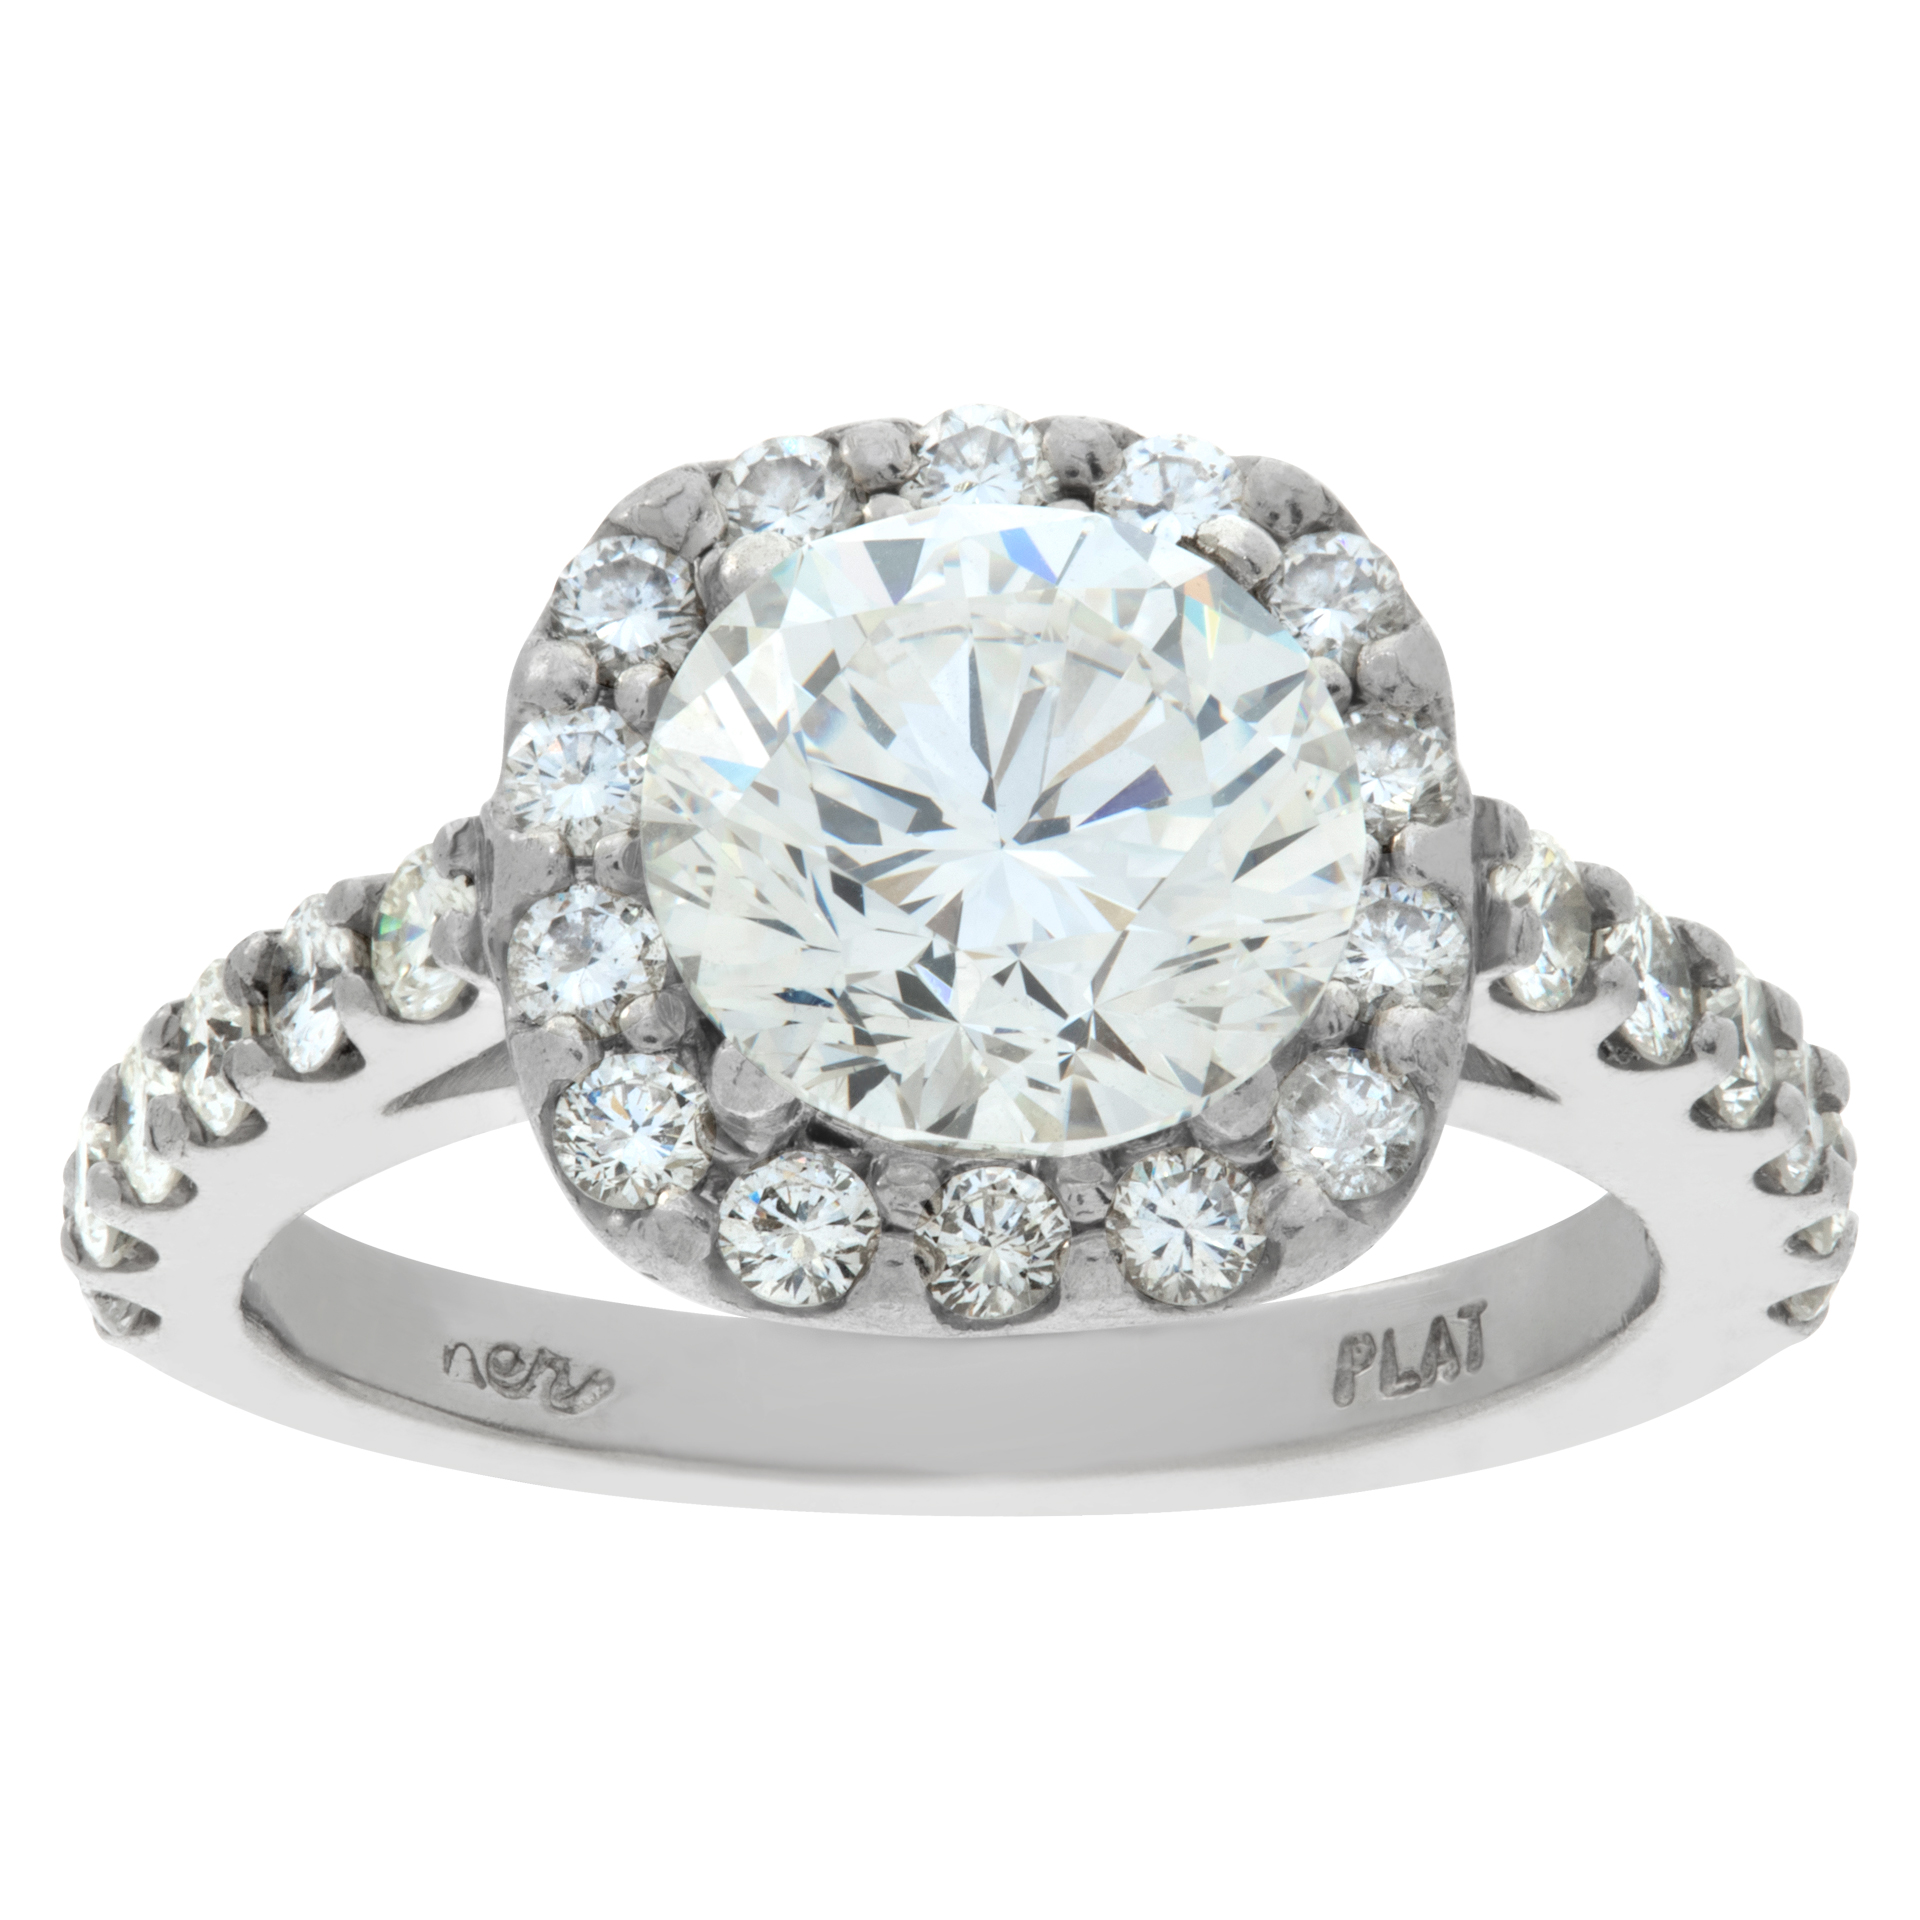 GIA certified round brilliant cut diamond 2.03 carat ( I color, SI1 clarity) ring set in platrinum